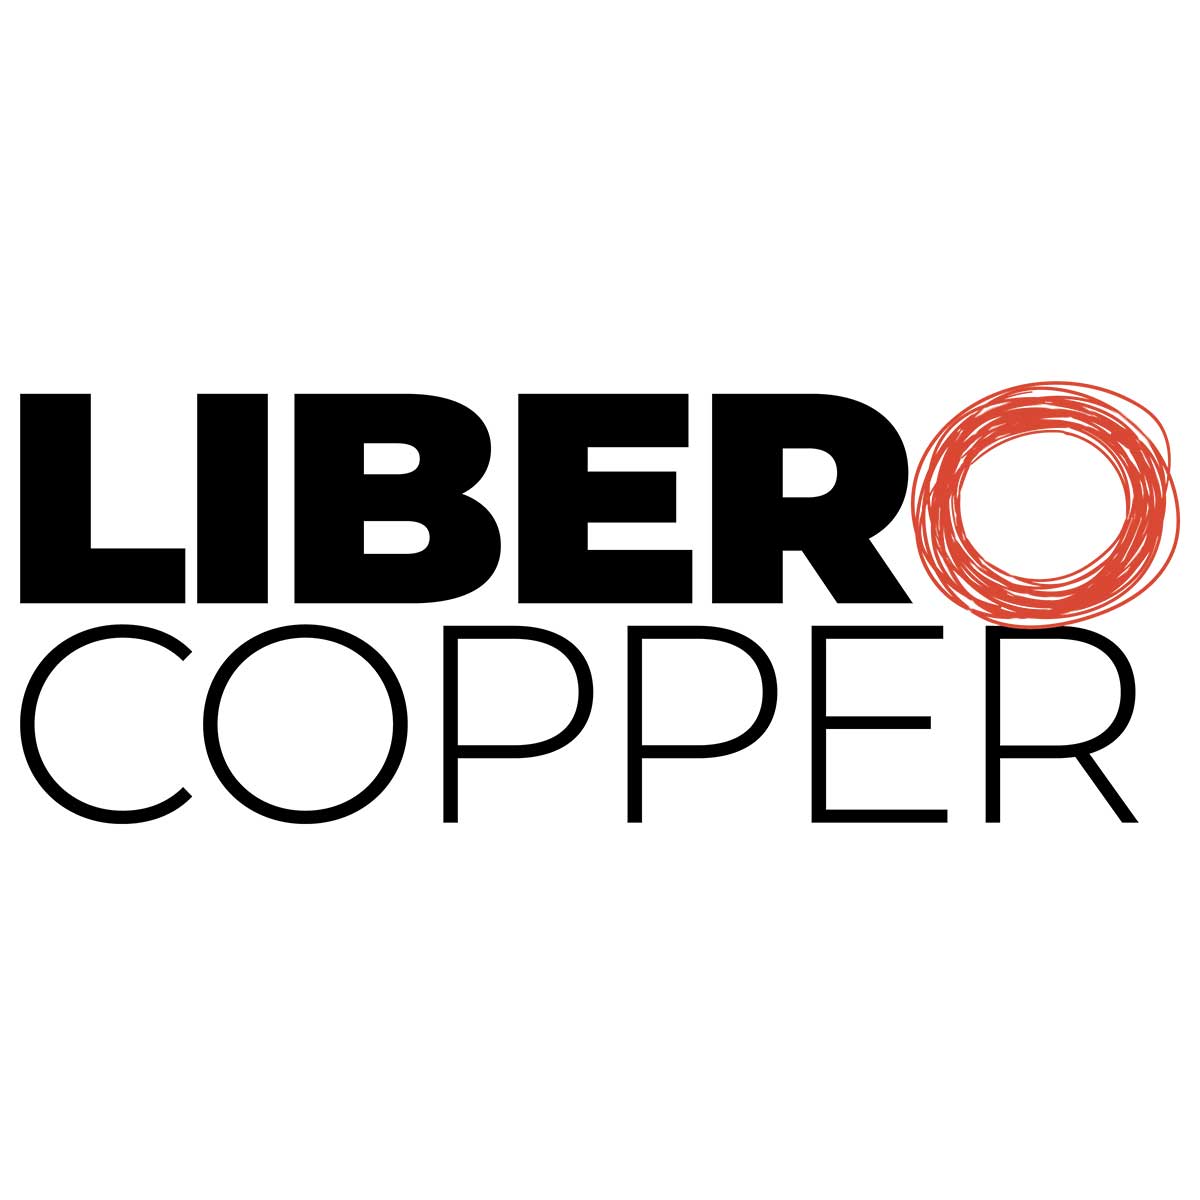 Libero - Crunchbase Company Profile & Funding